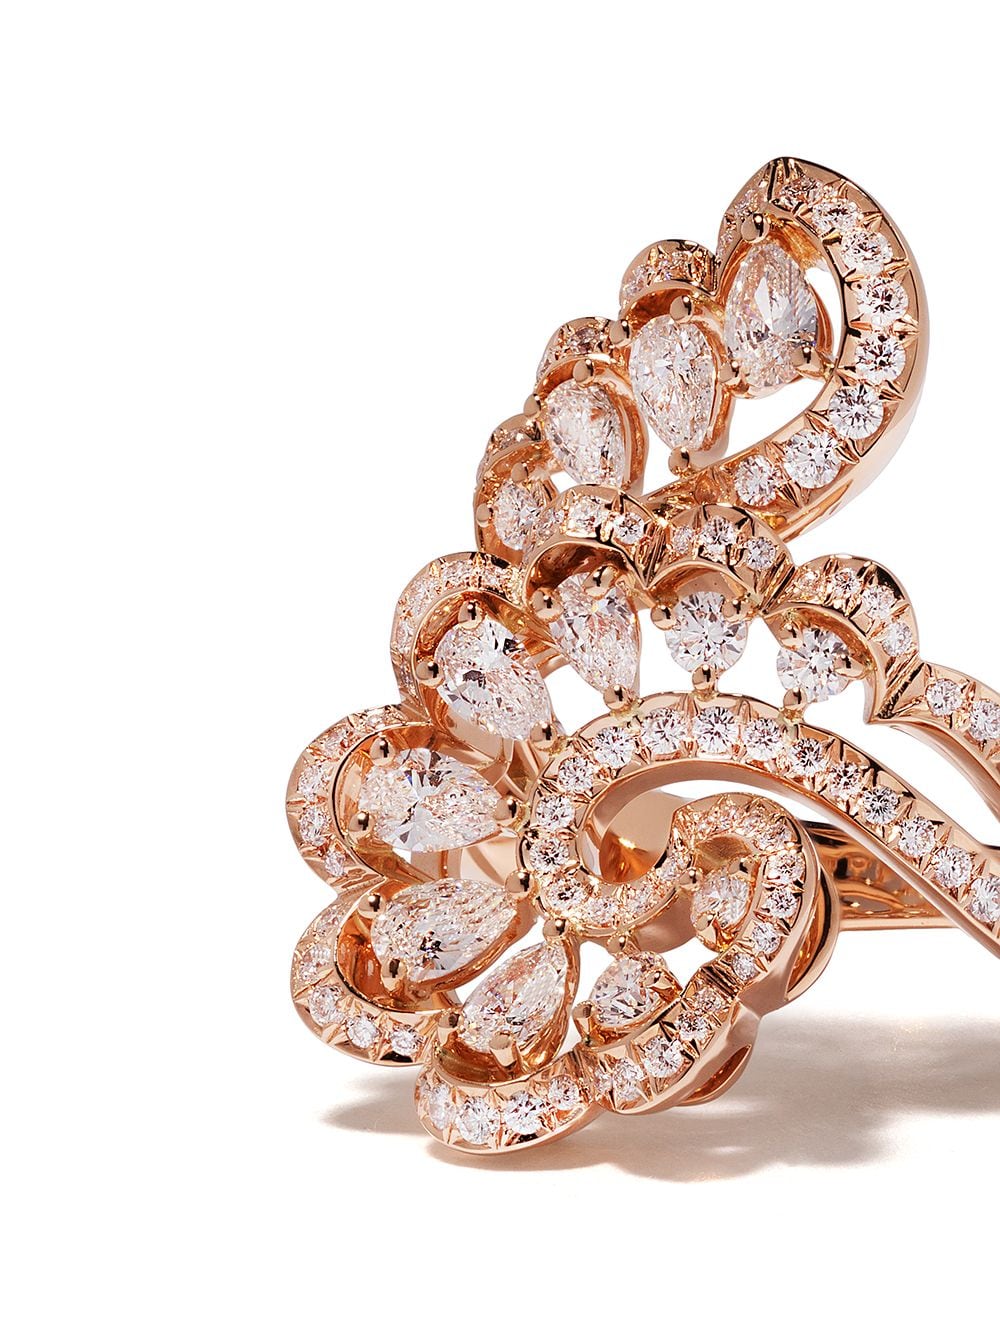 фото Chopard кольцо из розового золота с бриллиантами